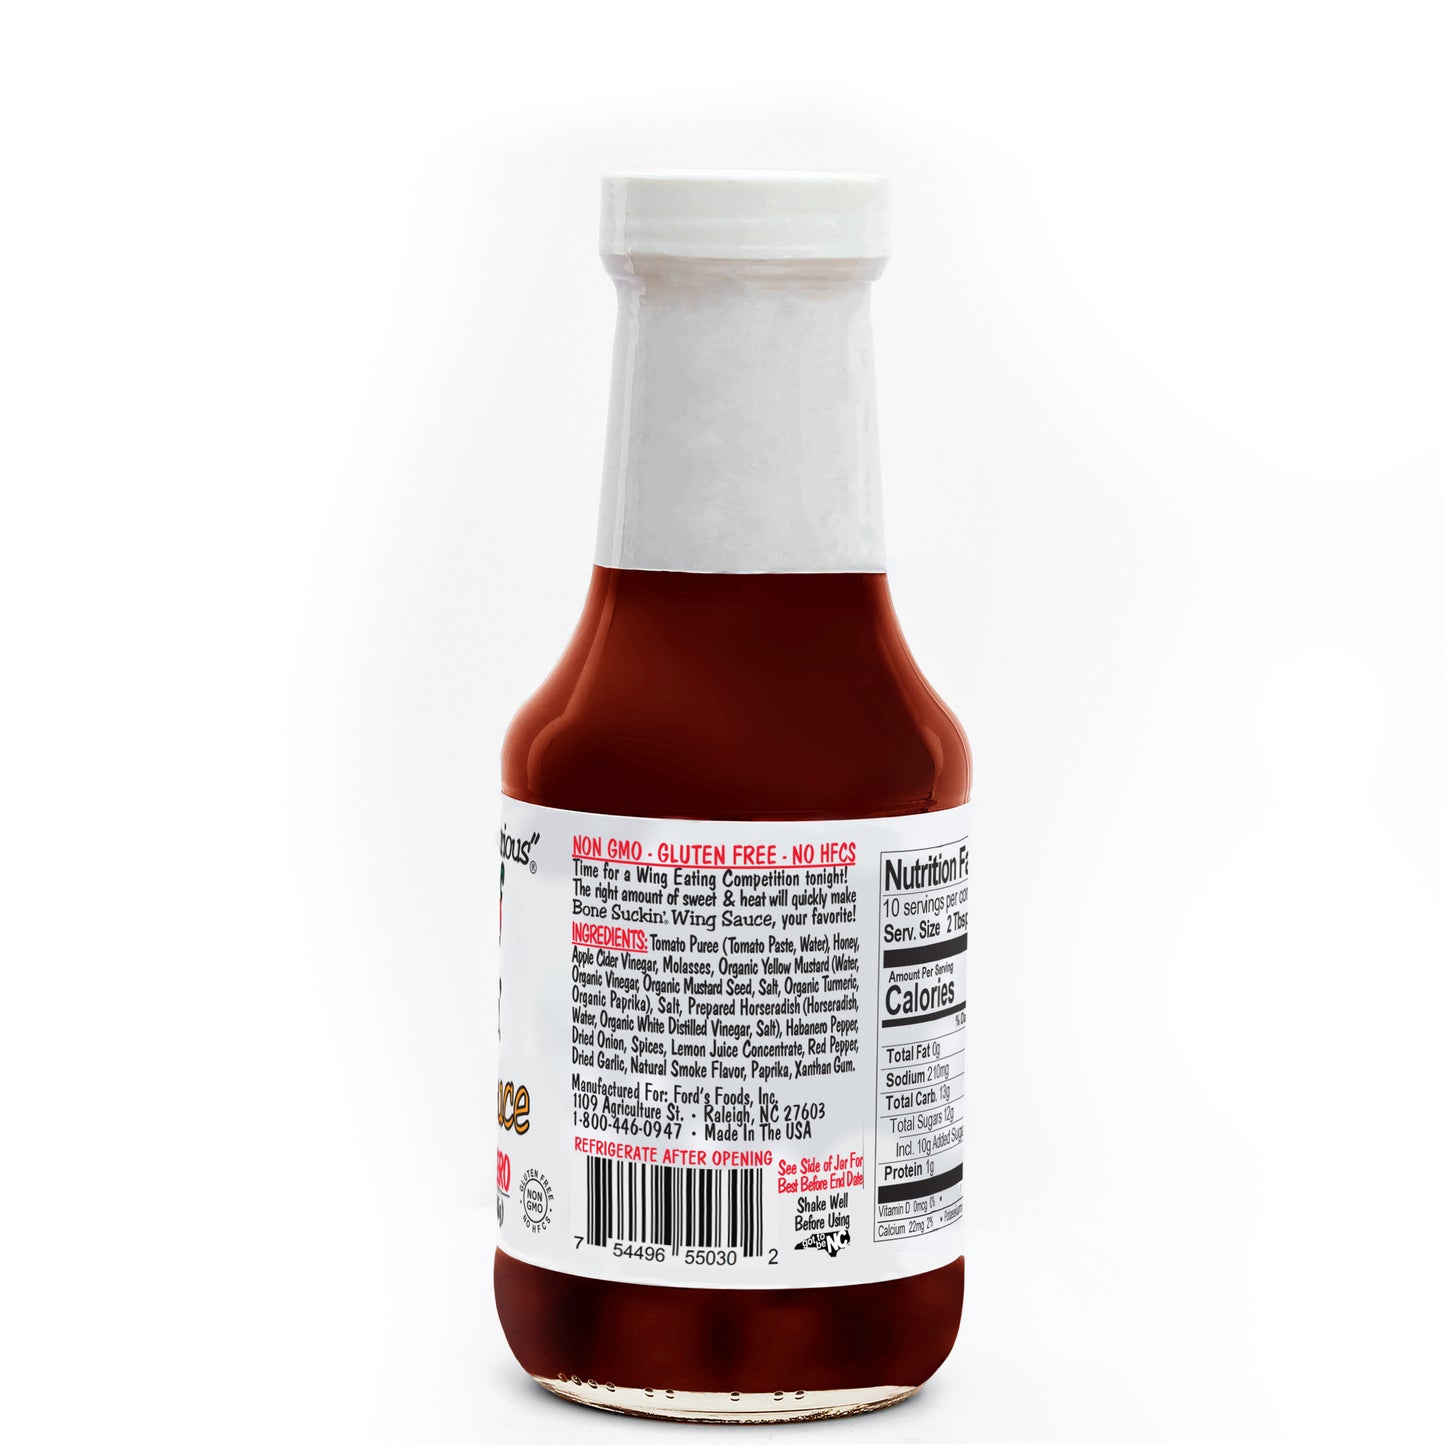 Bone Suckin'® Wing Sauce, Honey & Habanero, 12.25 oz., Side of Label with Ingredients